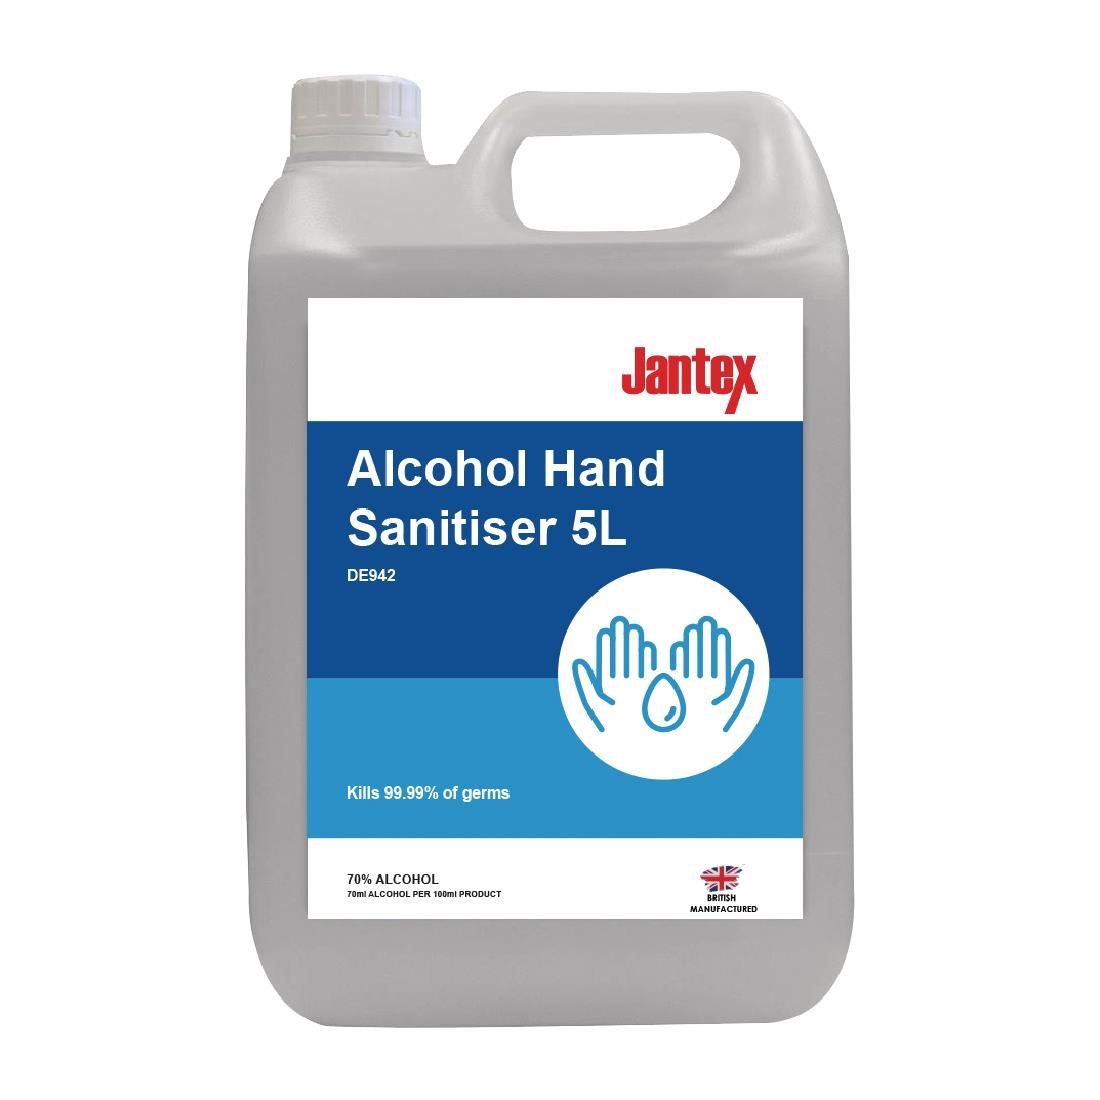 Jantex 70% Alcohol Hand Sanitiser 5Ltr - DE942  - 1